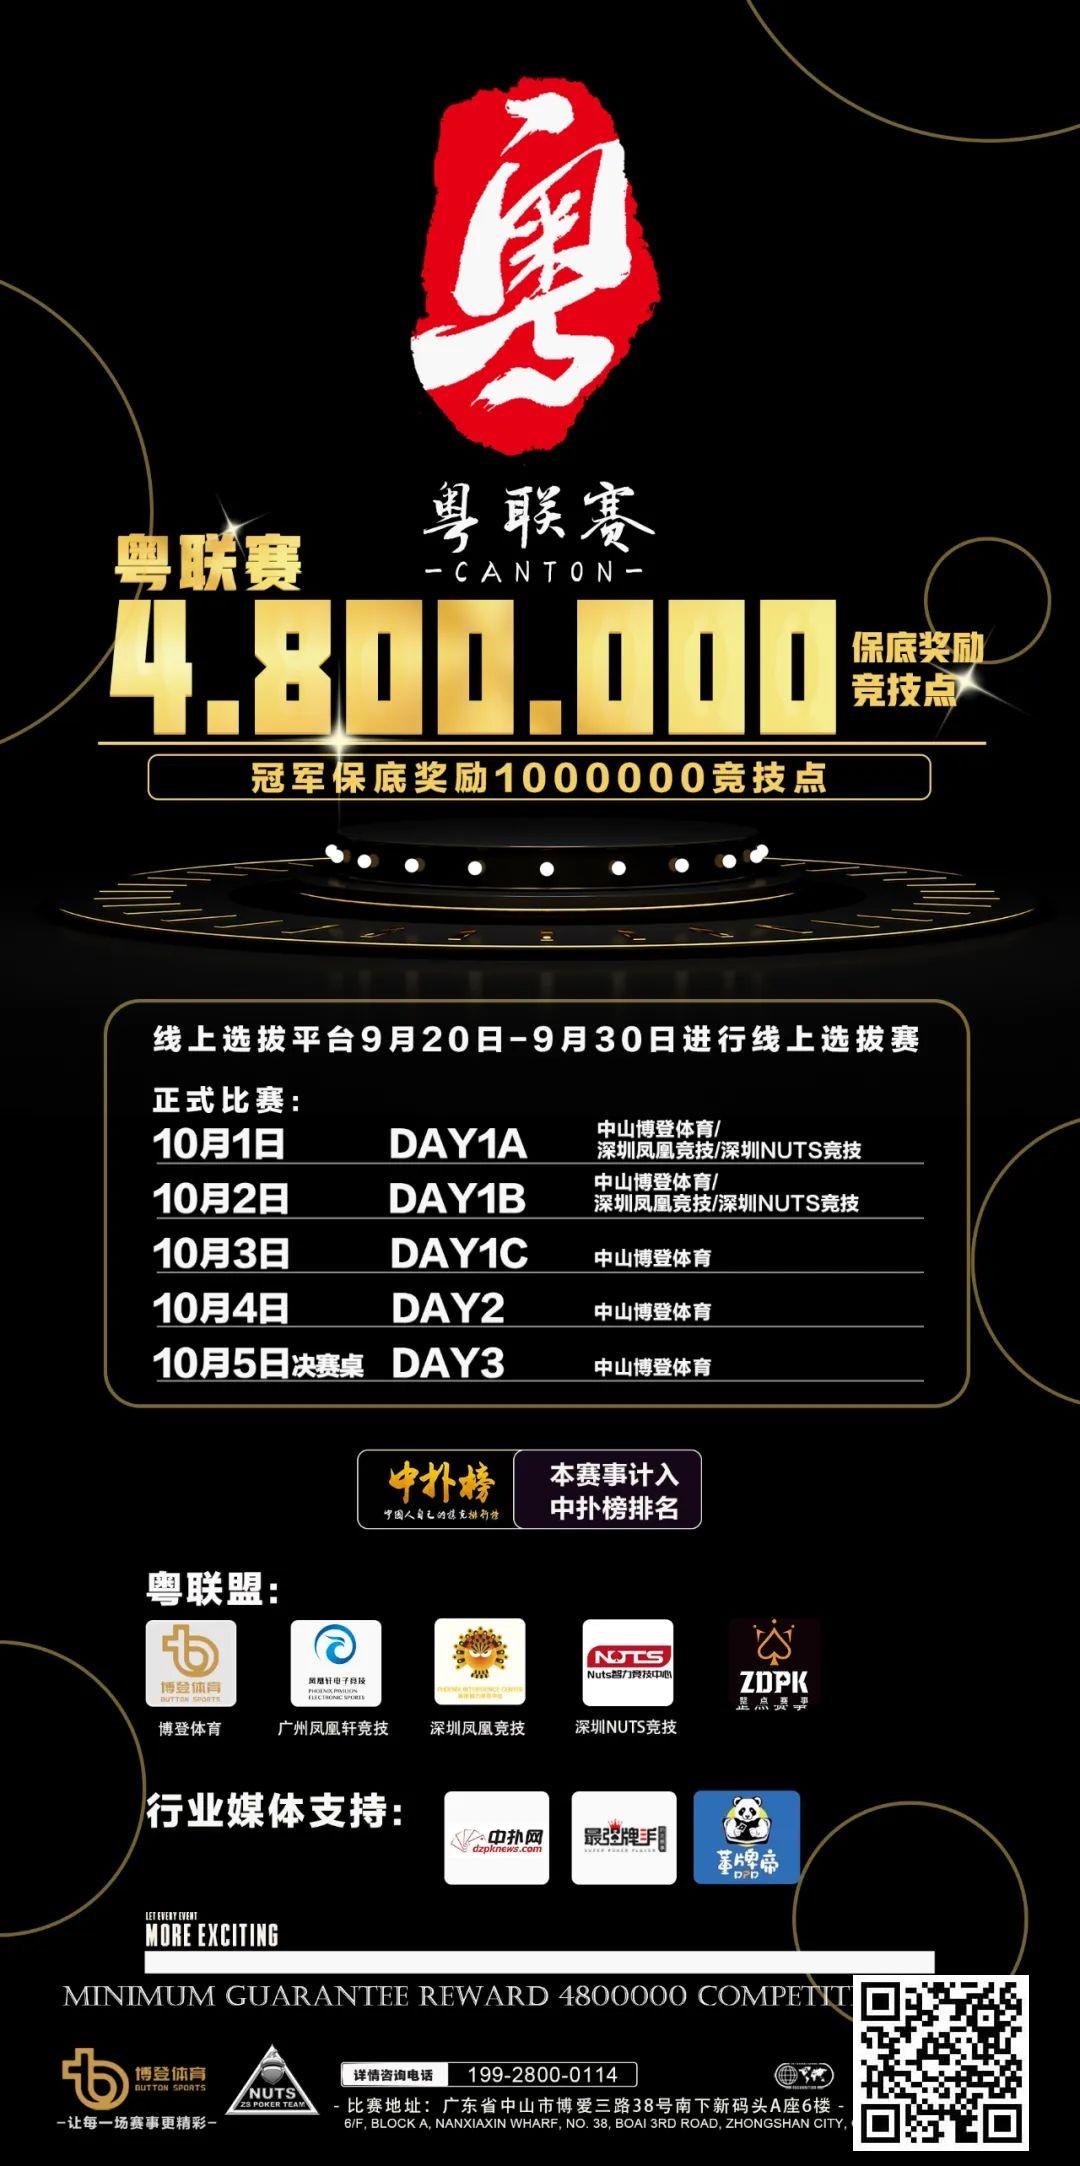 【EV 扑克】赛事信息 | 第三届博登杯定档 10 月 23 日在广东中山，详细赛程发布